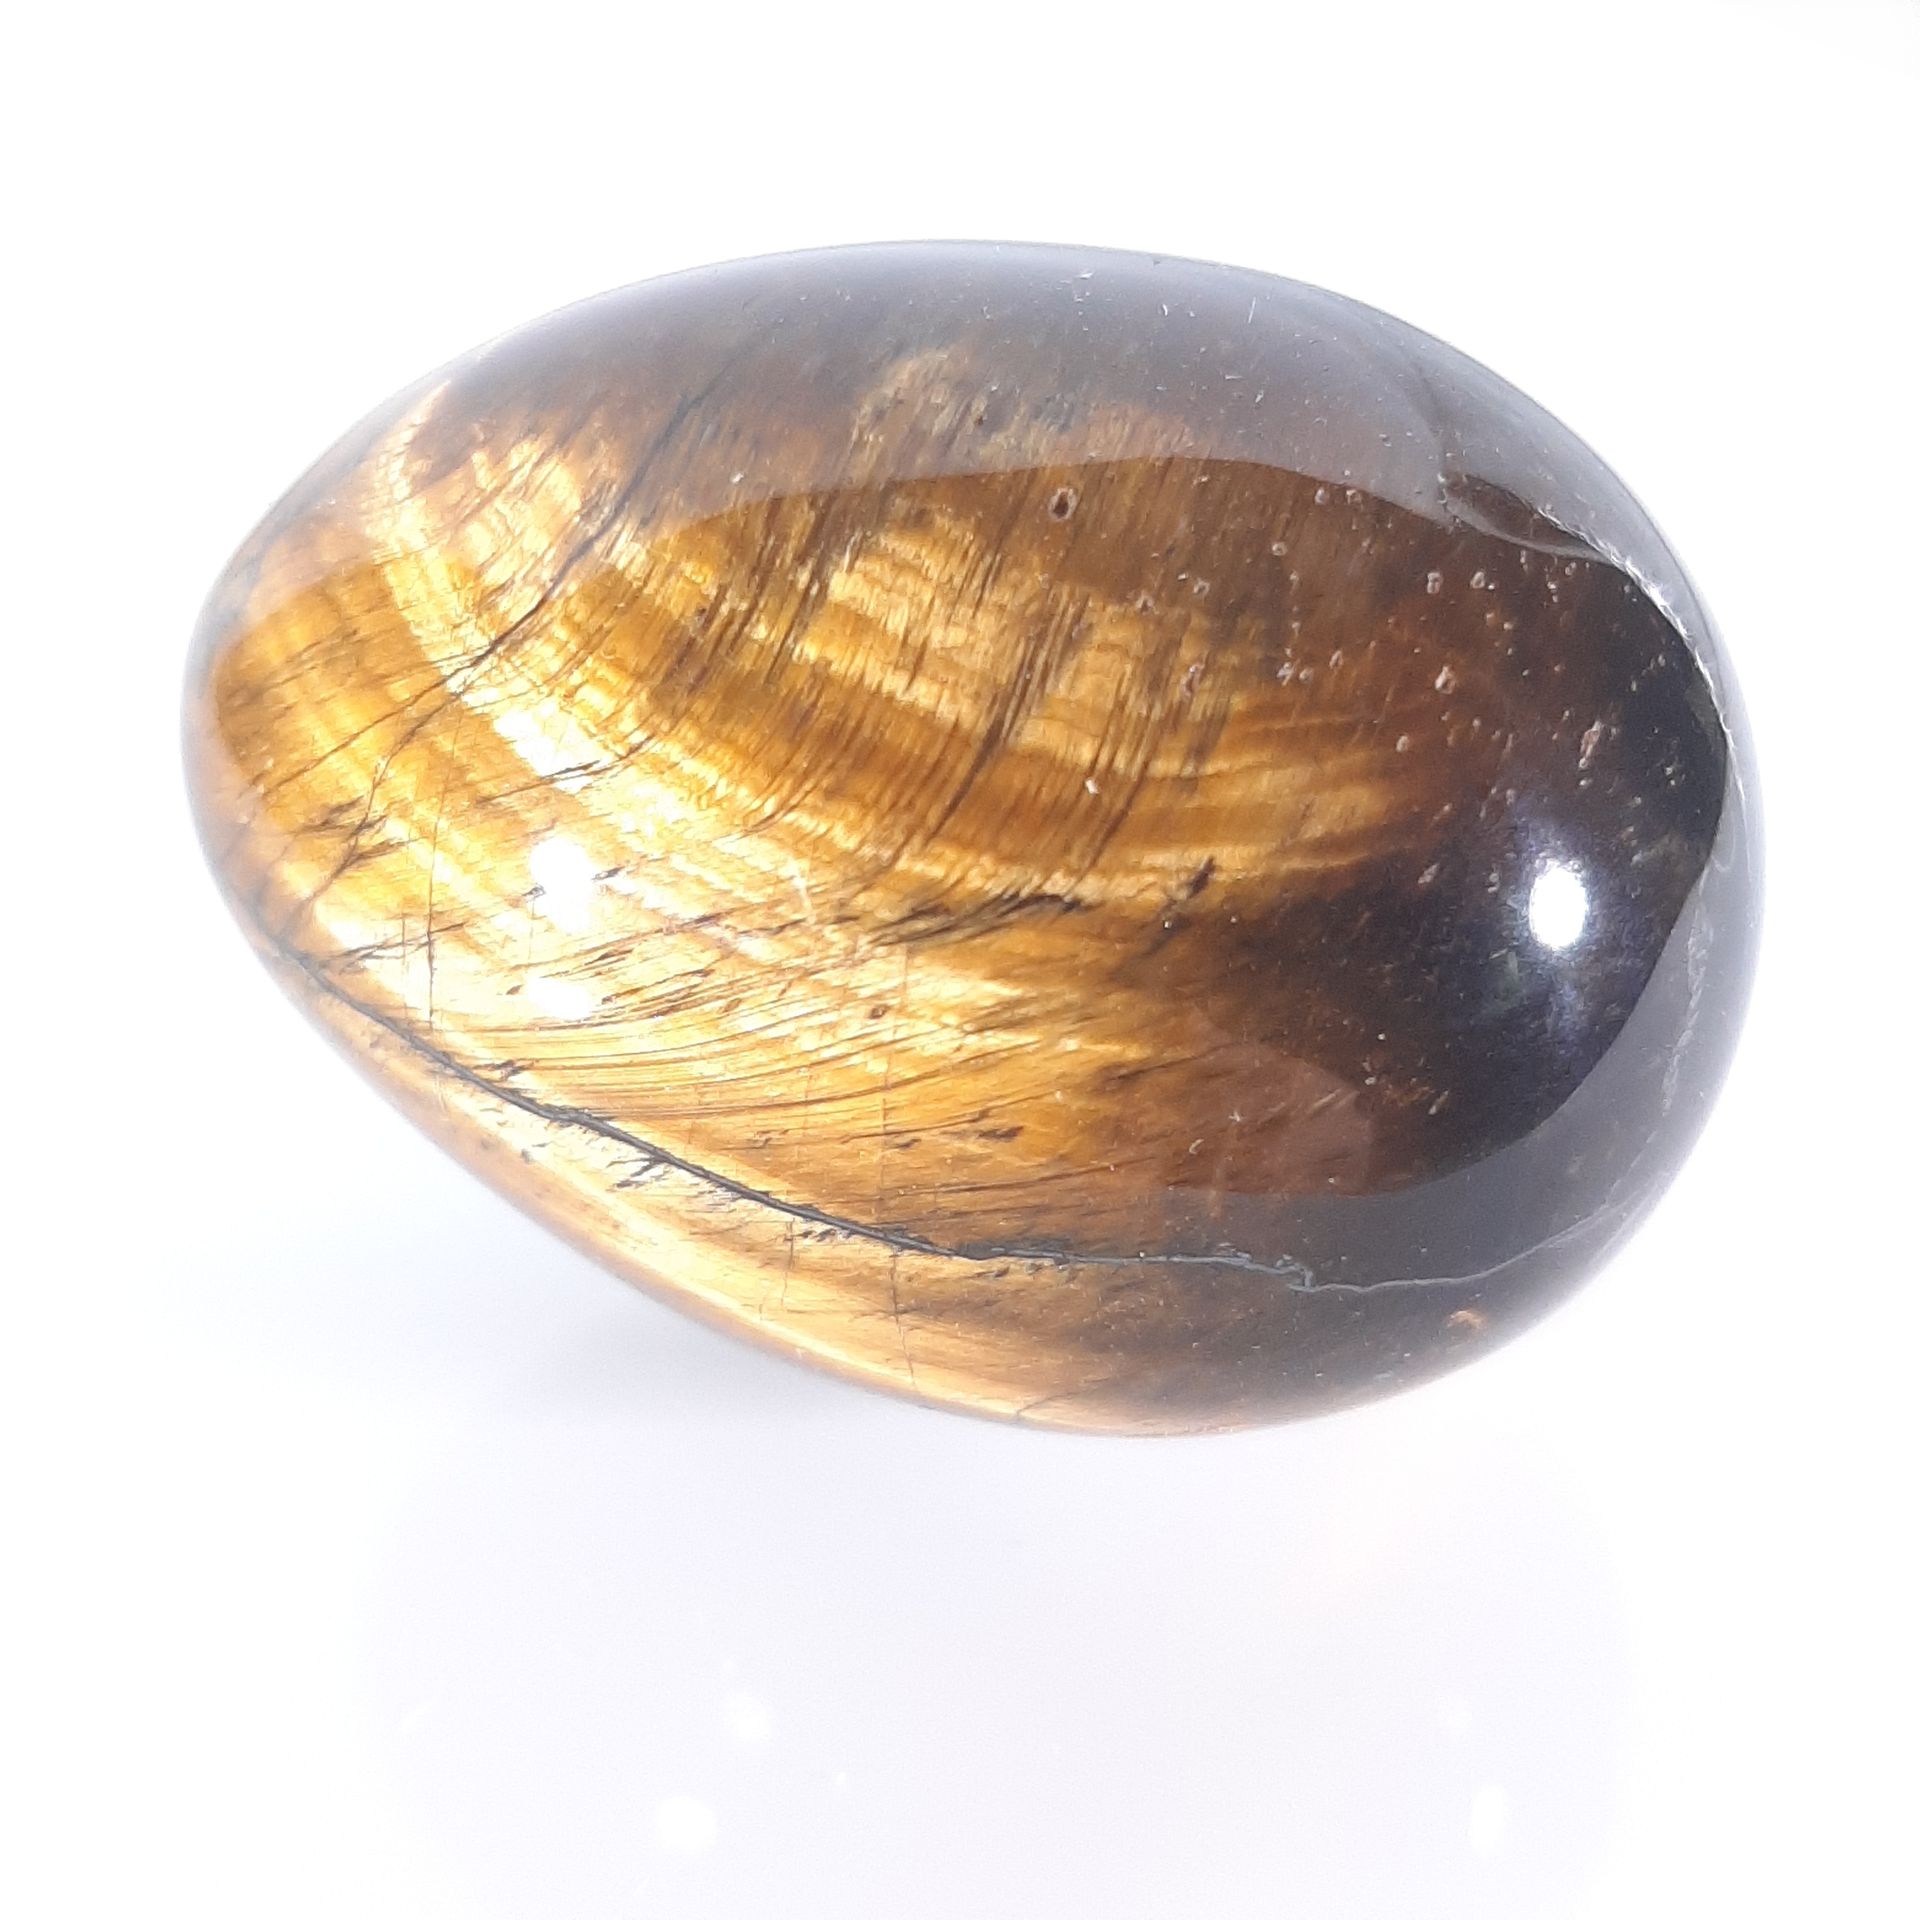 ŒIL DE TIGRE - 73.16 gr 虎眼石，含有闪石和褐铁矿的纤维状内含物，使其具有深黄褐色的光泽和颜色 - 极好的品质 - 完全抛光 - 蛋形 -&hellip;